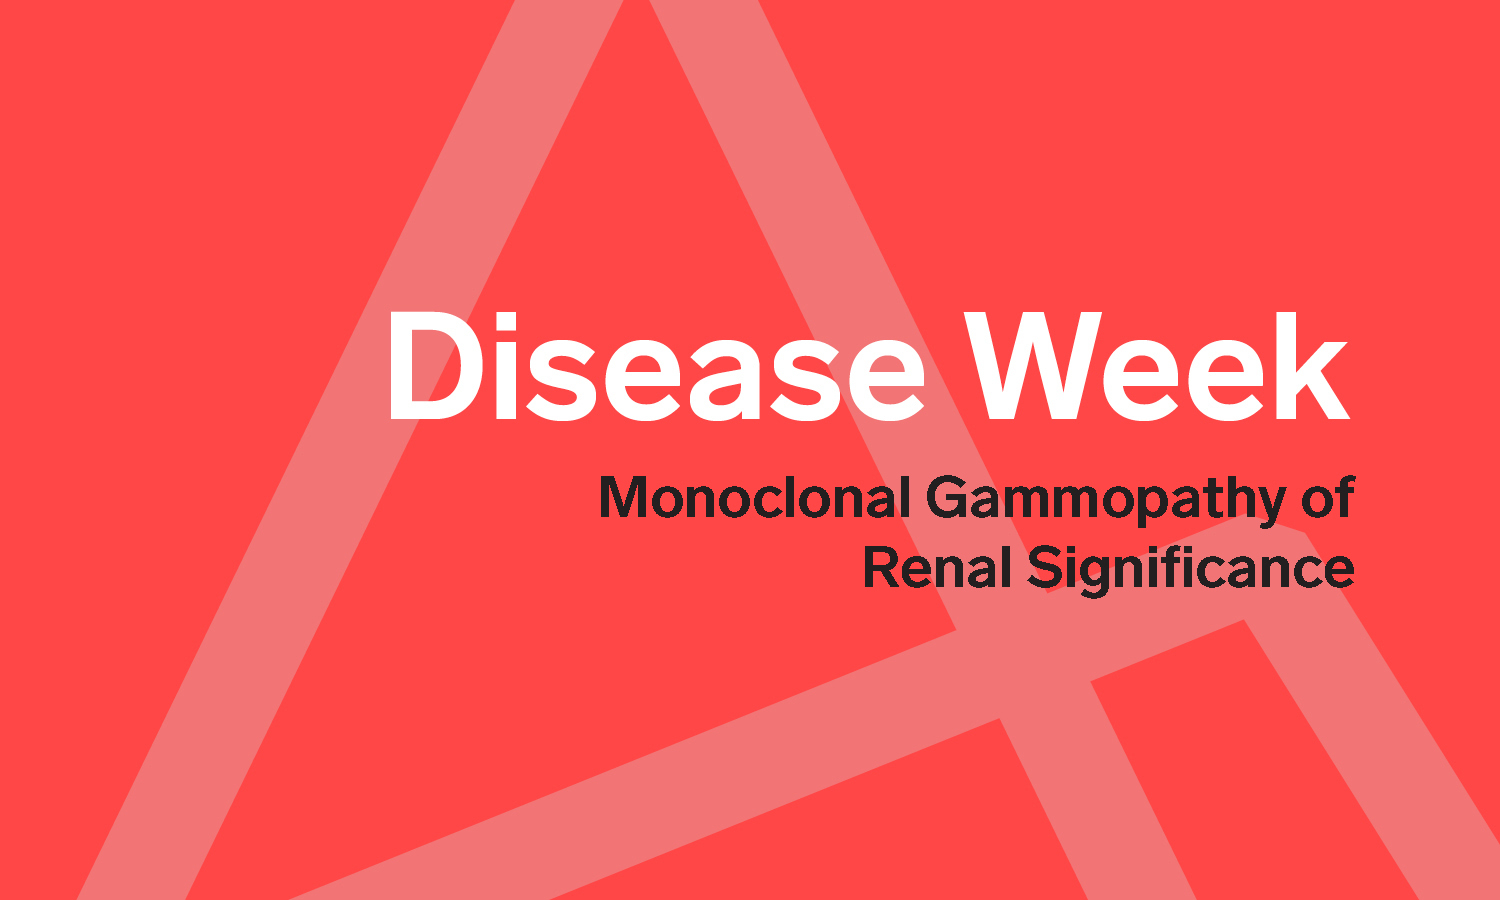 Monoclonal Gammopathy of Renal Significance, arkana laboratories, disease week, renal pathology, kidney biopsy